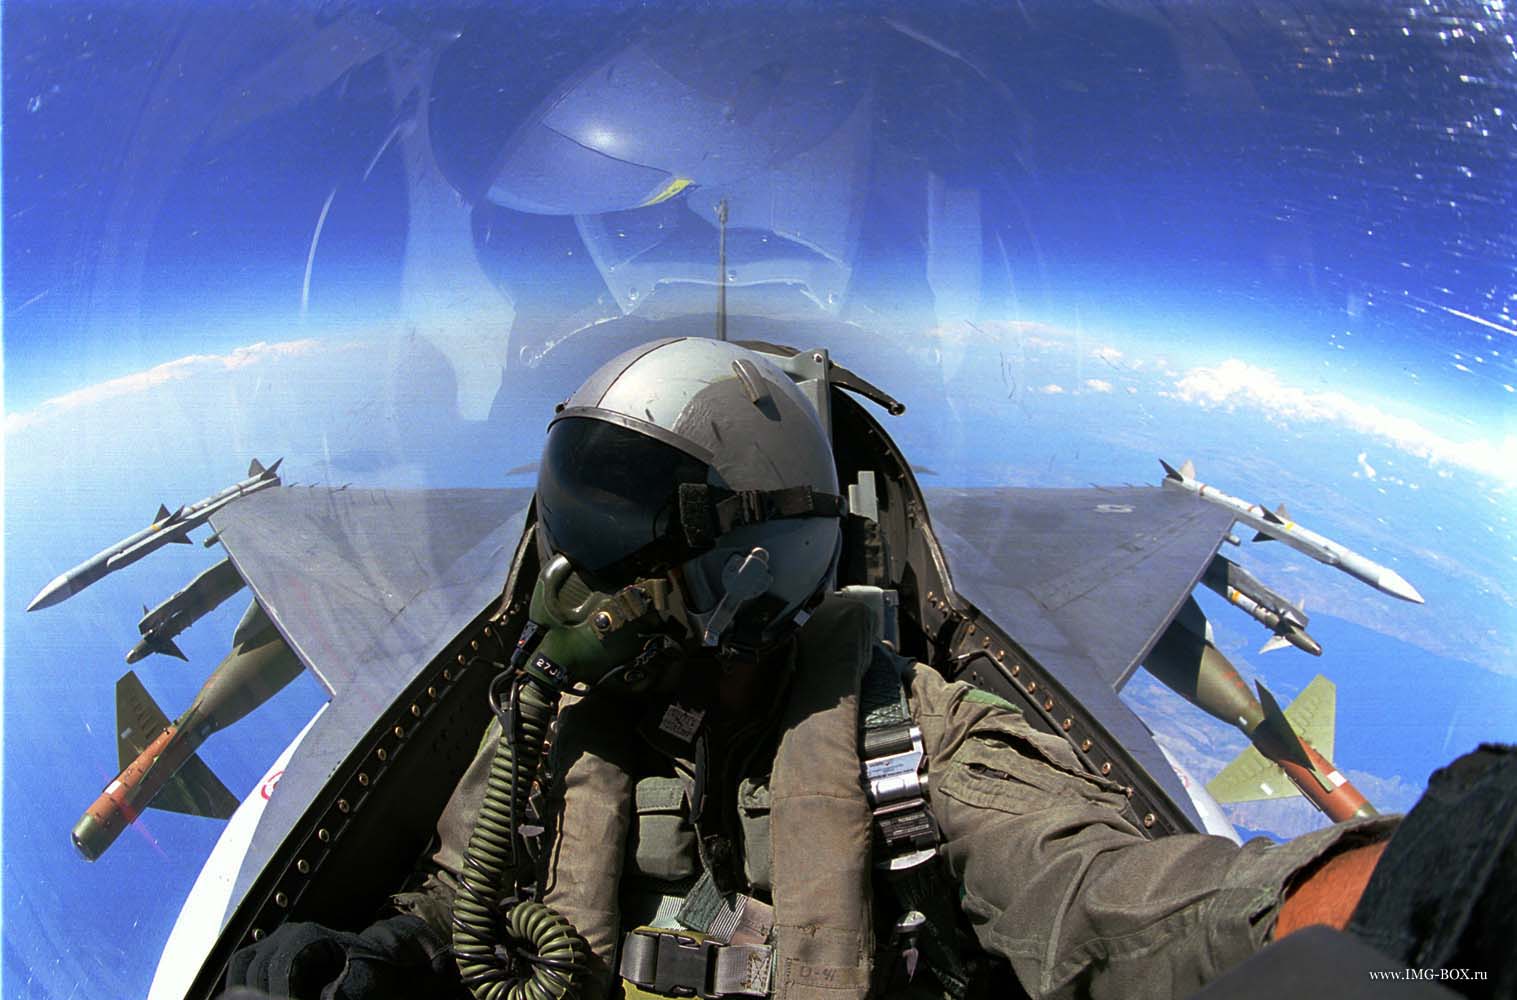  Fighter pilot helmet wallpaper   Wallery